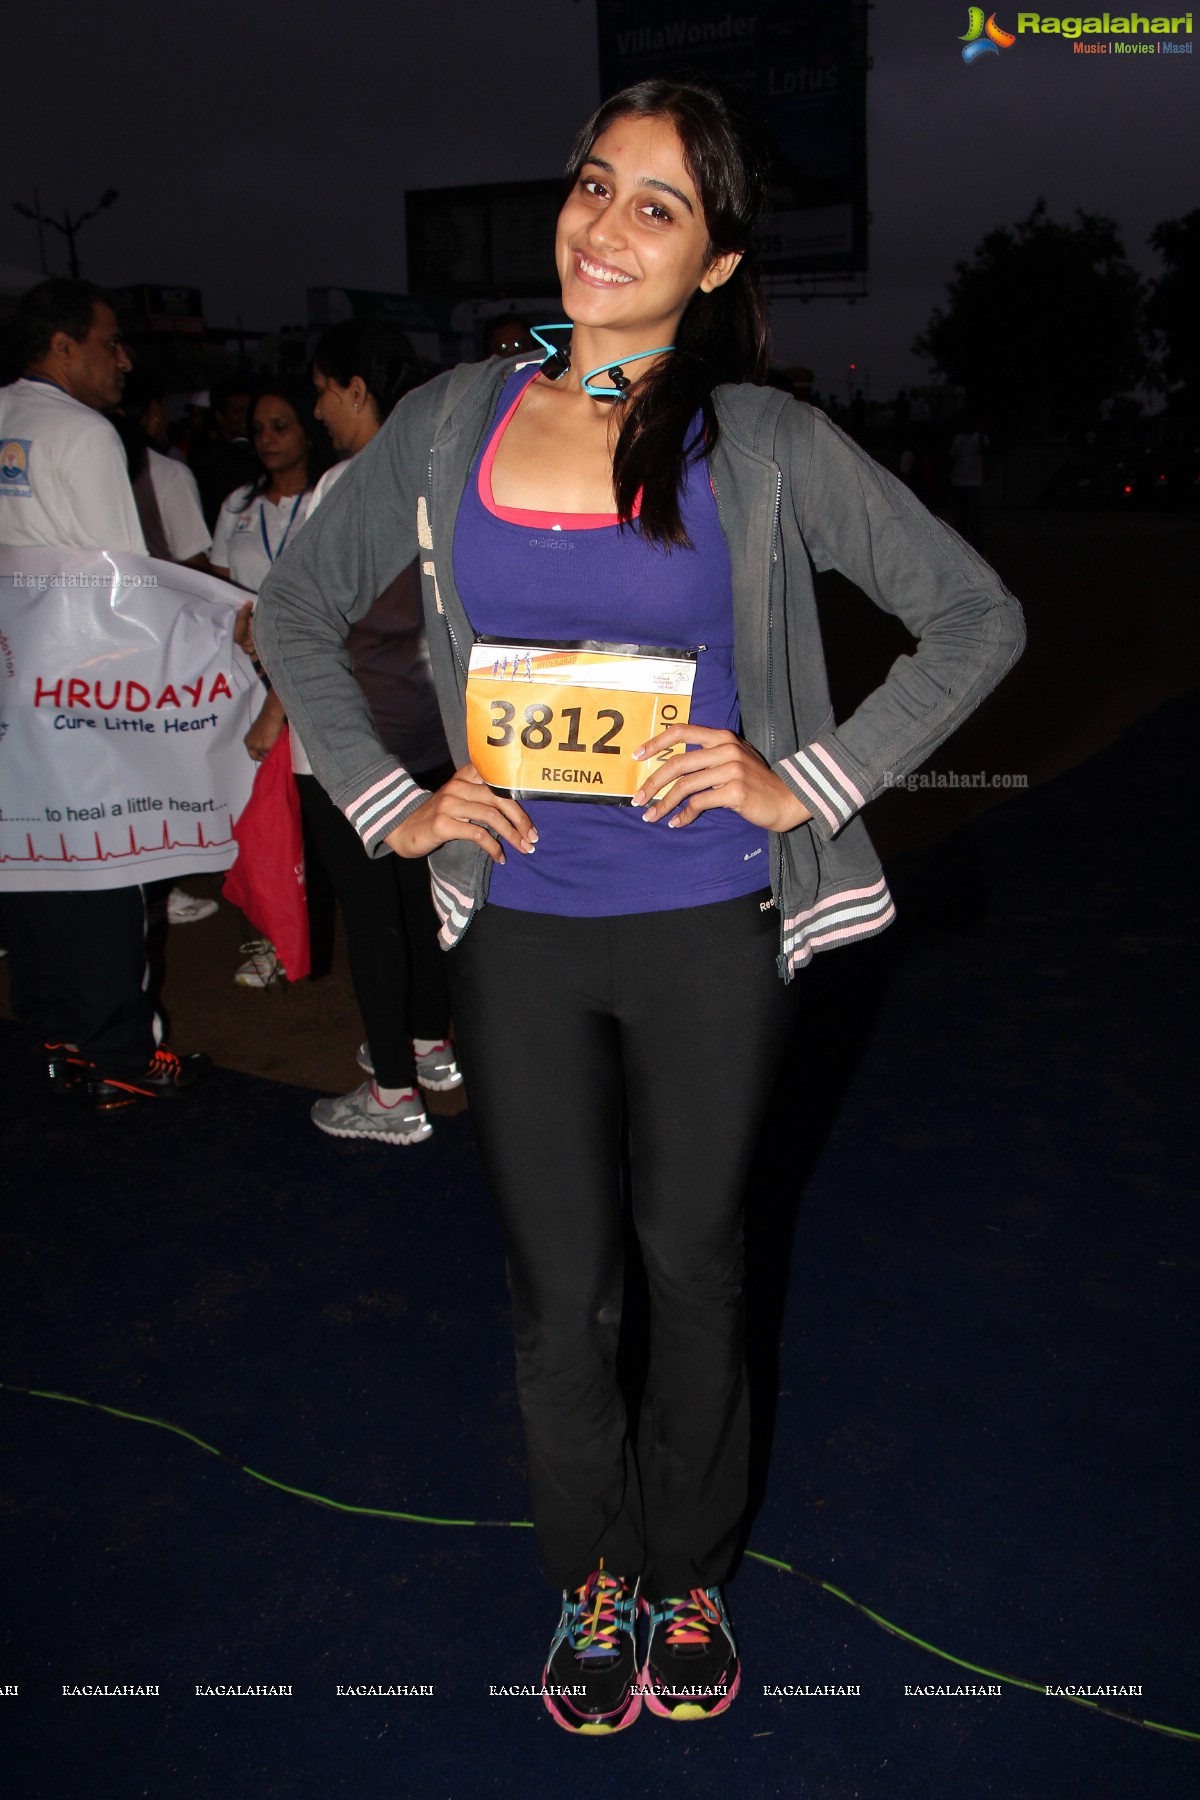 Hyderabad 10K Run